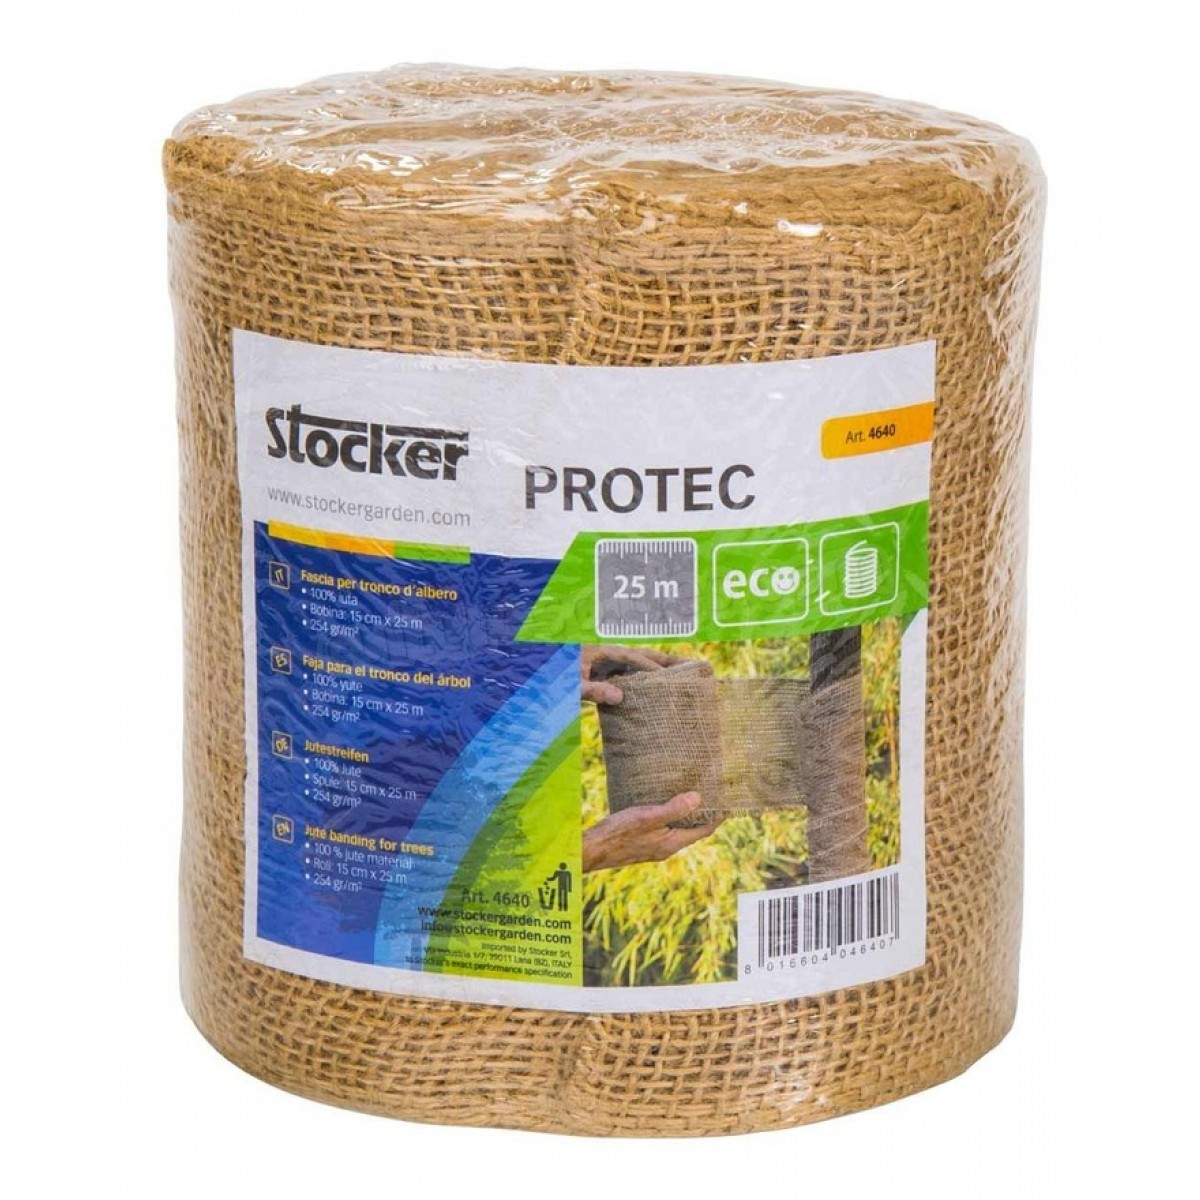 Stocker Protec fascia per tronco d'albero 0,15x25 m 210 gr/mq soldes en ligne - Stocker Protec fascia per tronco d'albero 0,15x25 m 210 gr/mq soldes en ligne